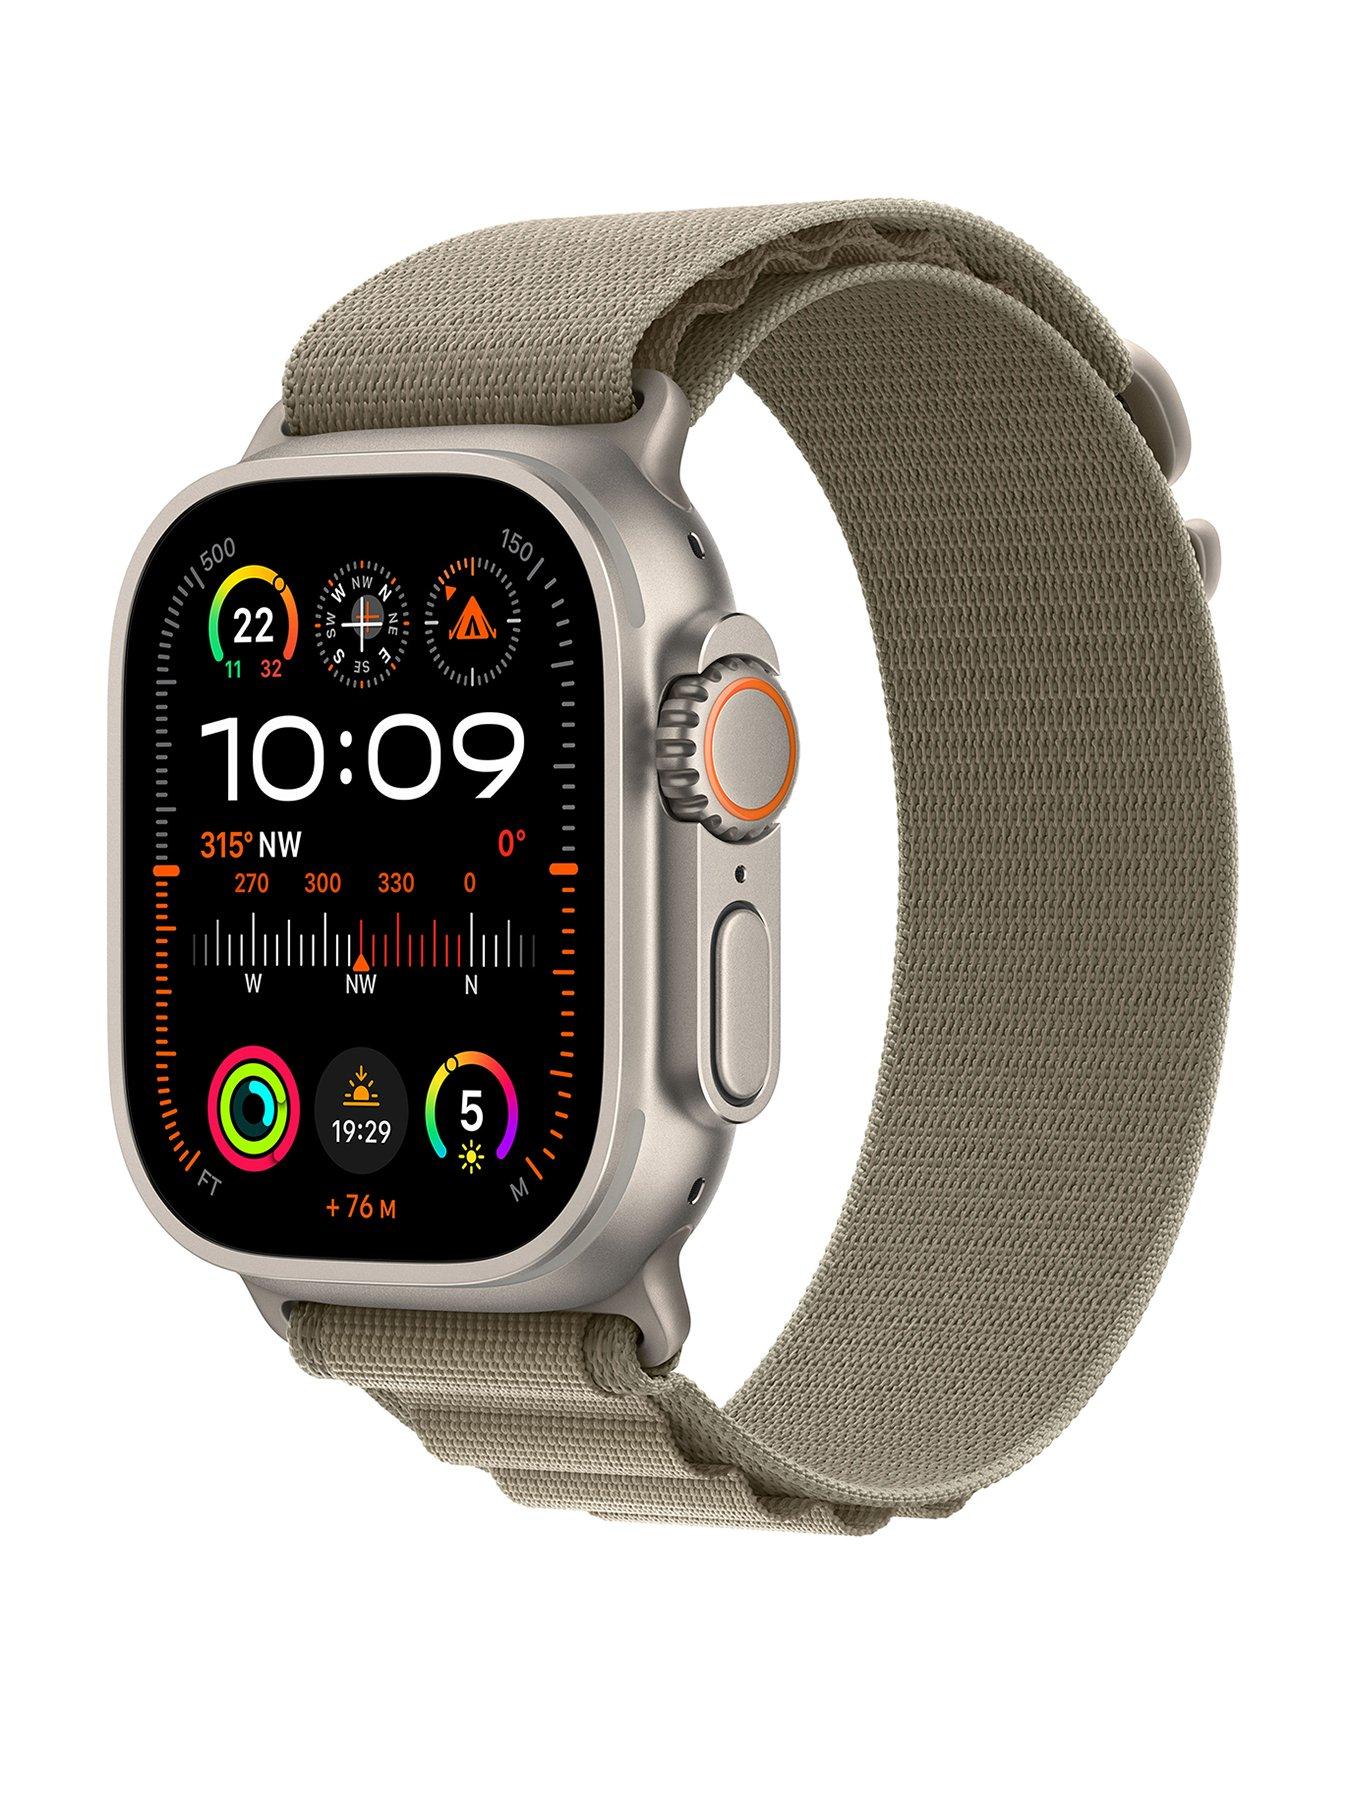 Smart Watches | Apple, Fitbit, Garmin More 